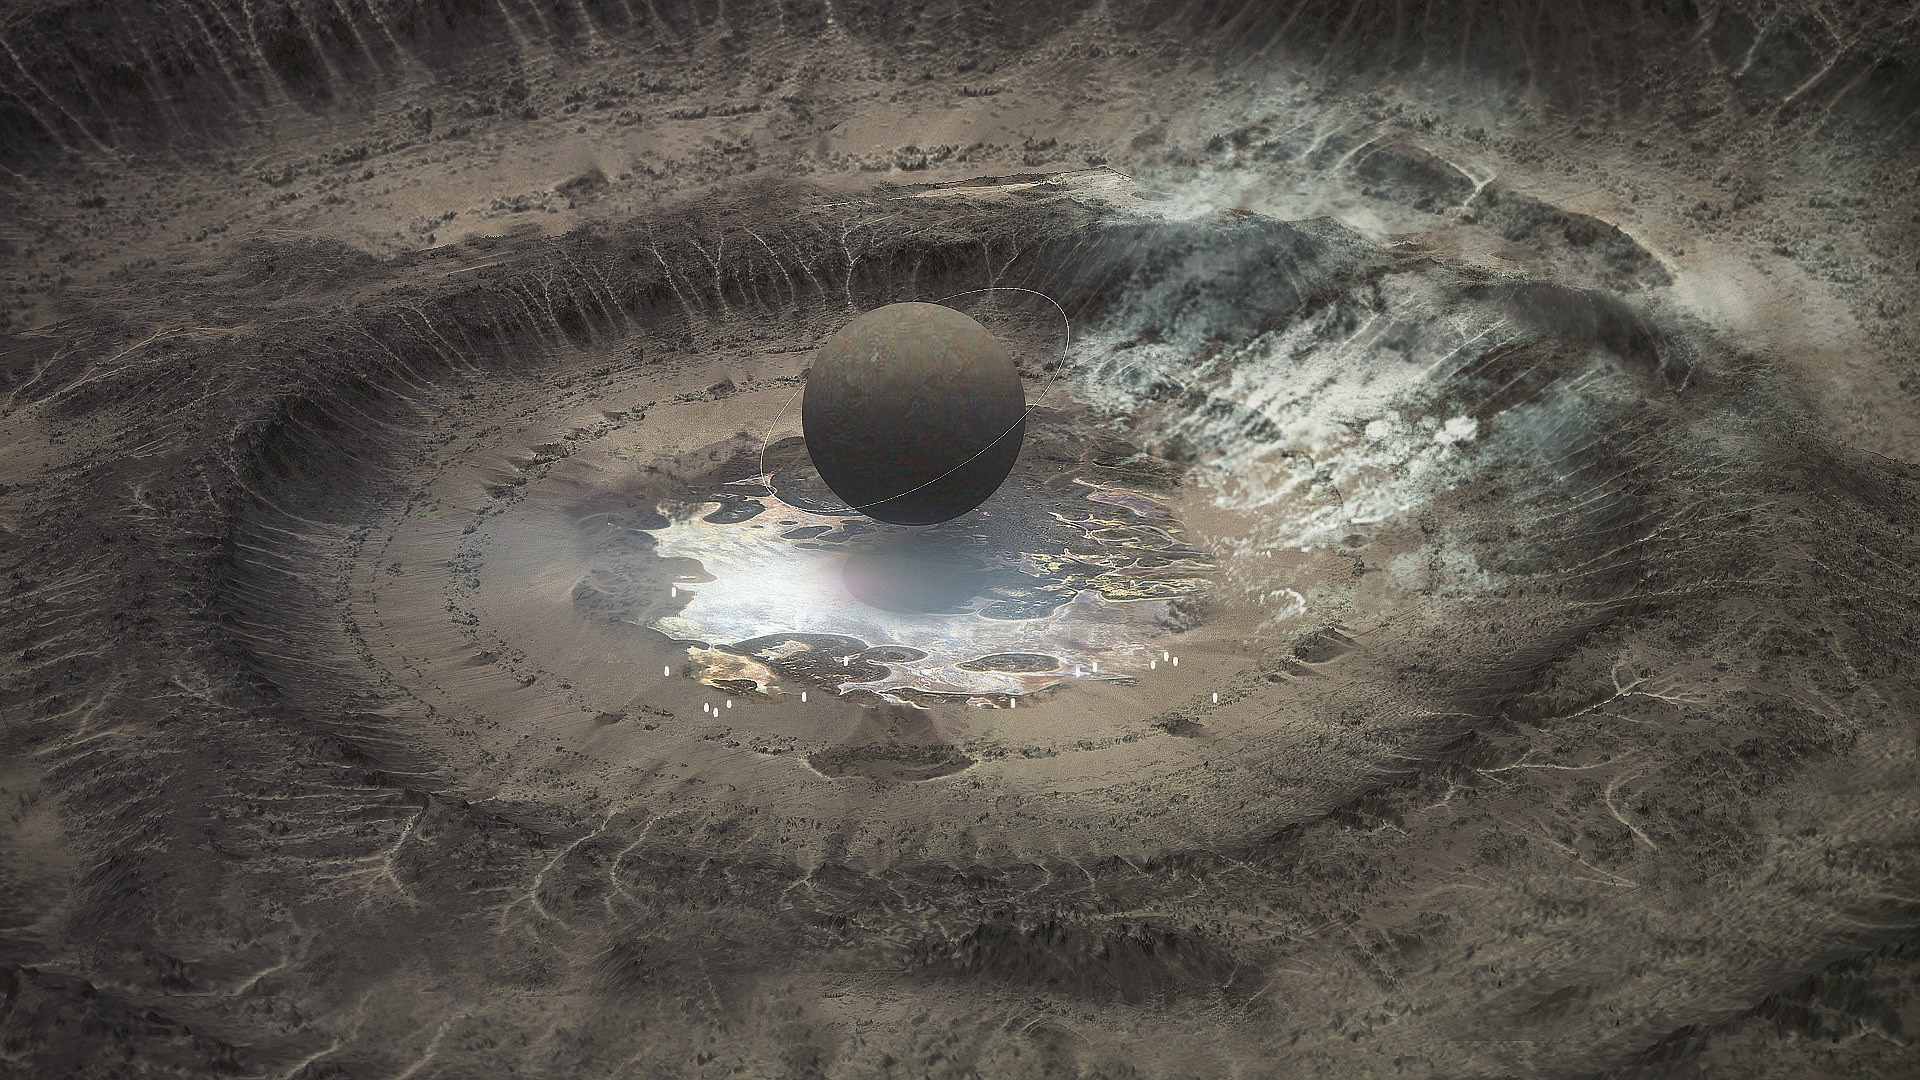 Самый крупный кратер на земле. Кратер Вредефорт. Кратер Вредефорт ЮАР. Кратер Бэрринджера. Юкатан кратер астероида.